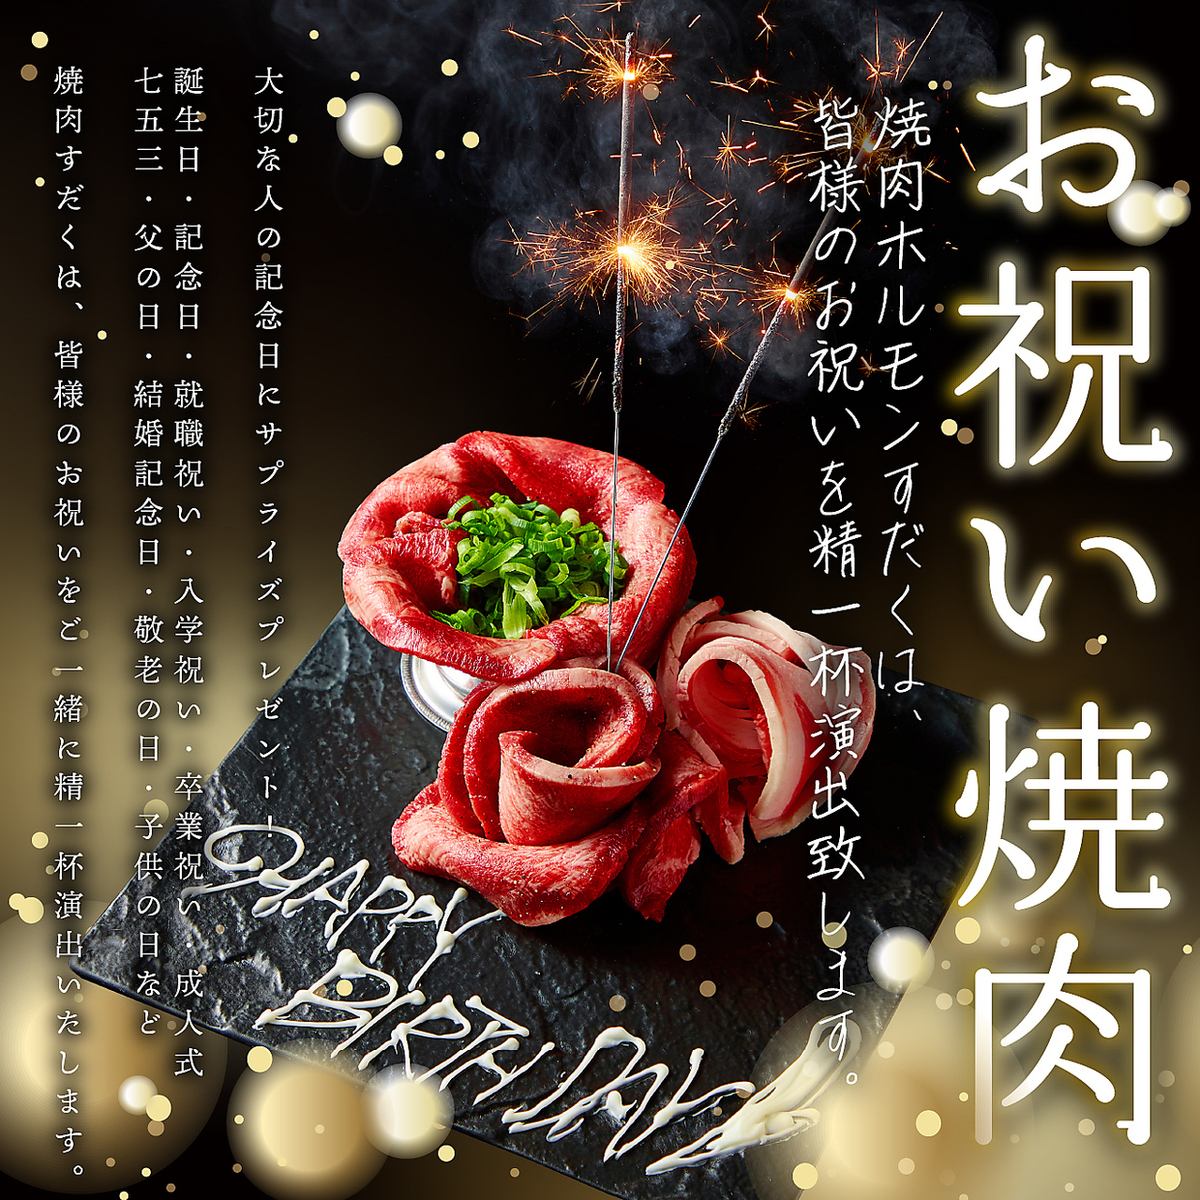 ◇Yakiniku restaurant with Omi beef and Hokkaido rice ◇Please use it for family celebrations